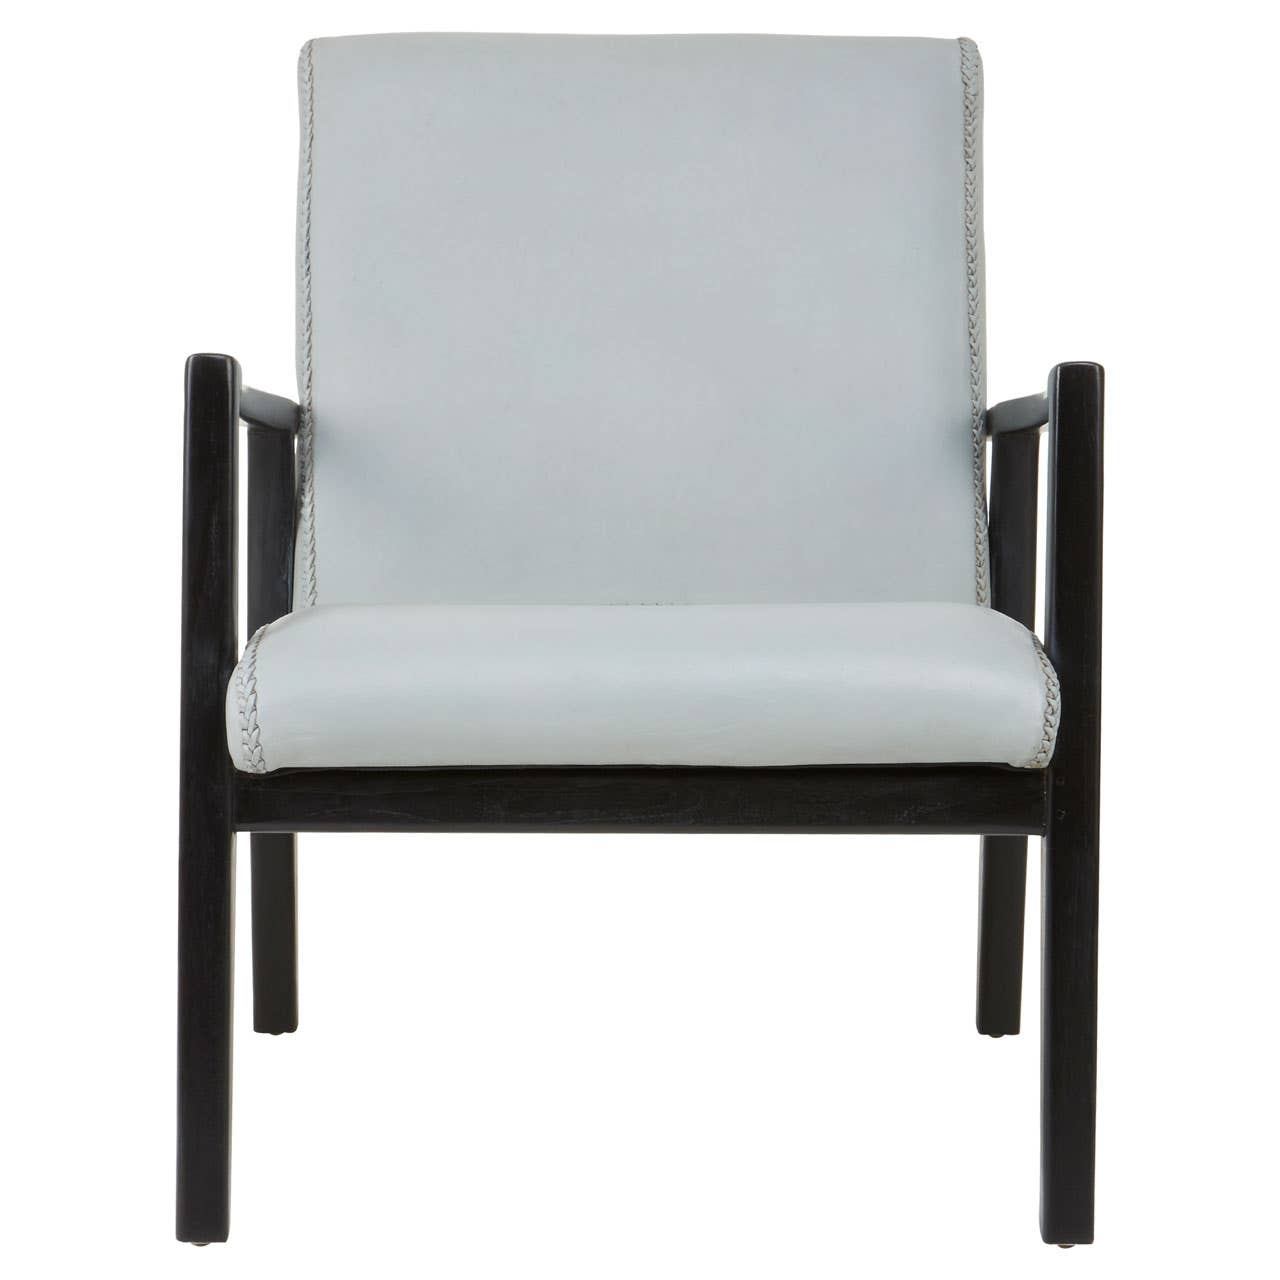 Kendari Grey Leather Curved Seat Chair